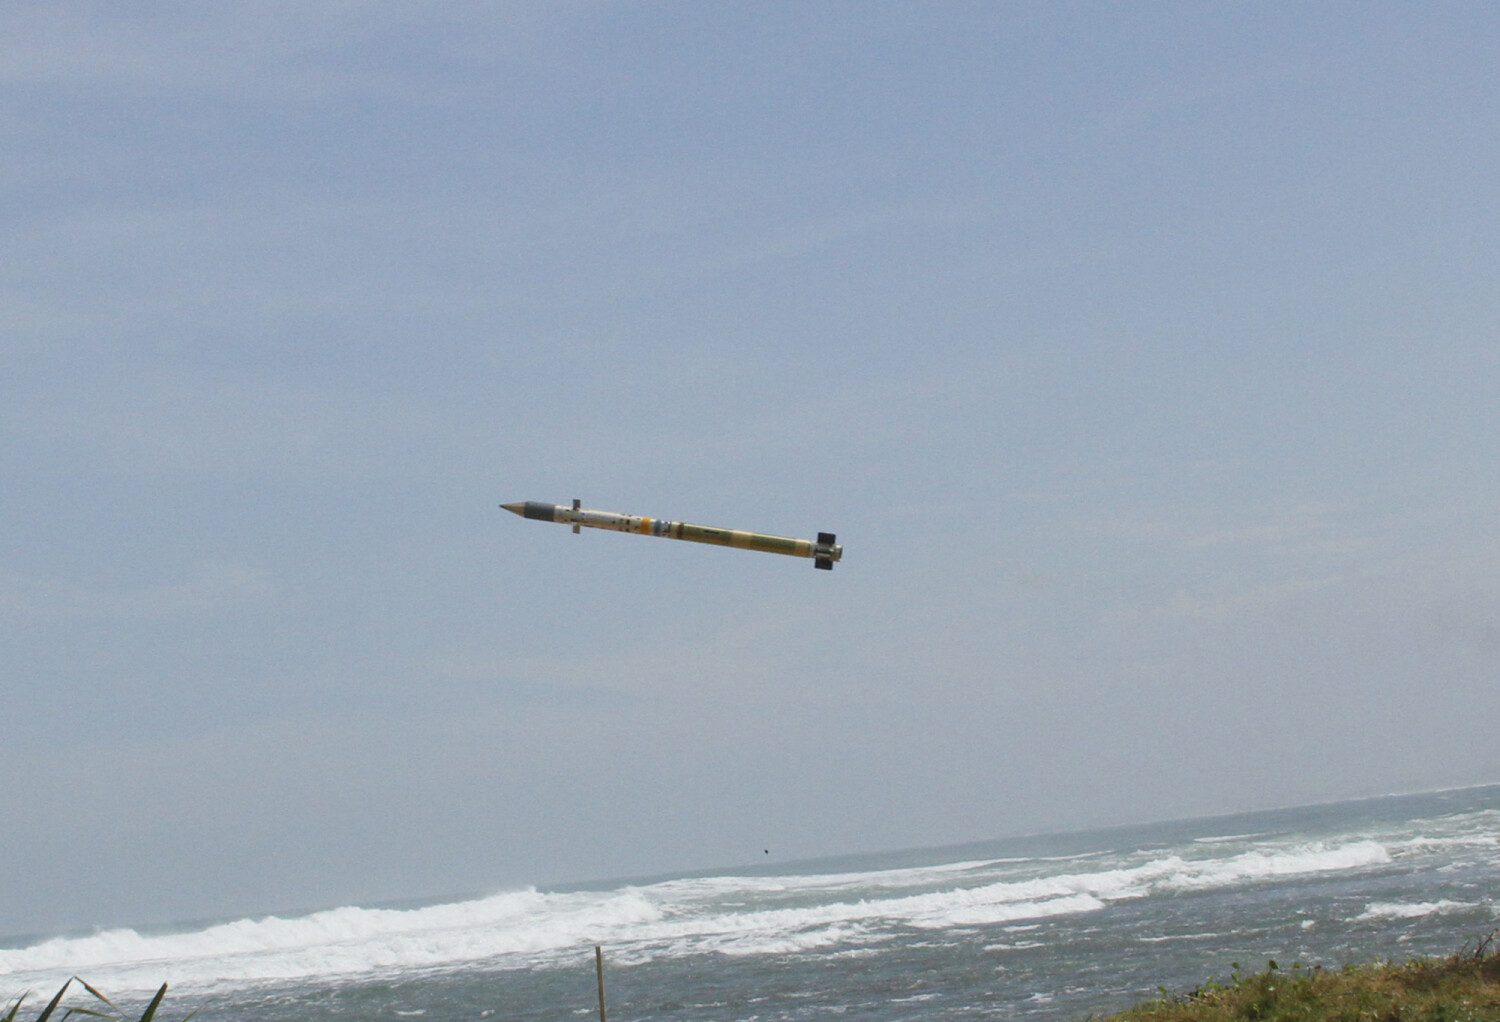 Mistral firing, Pameungpeuk, Java, Indonesia.